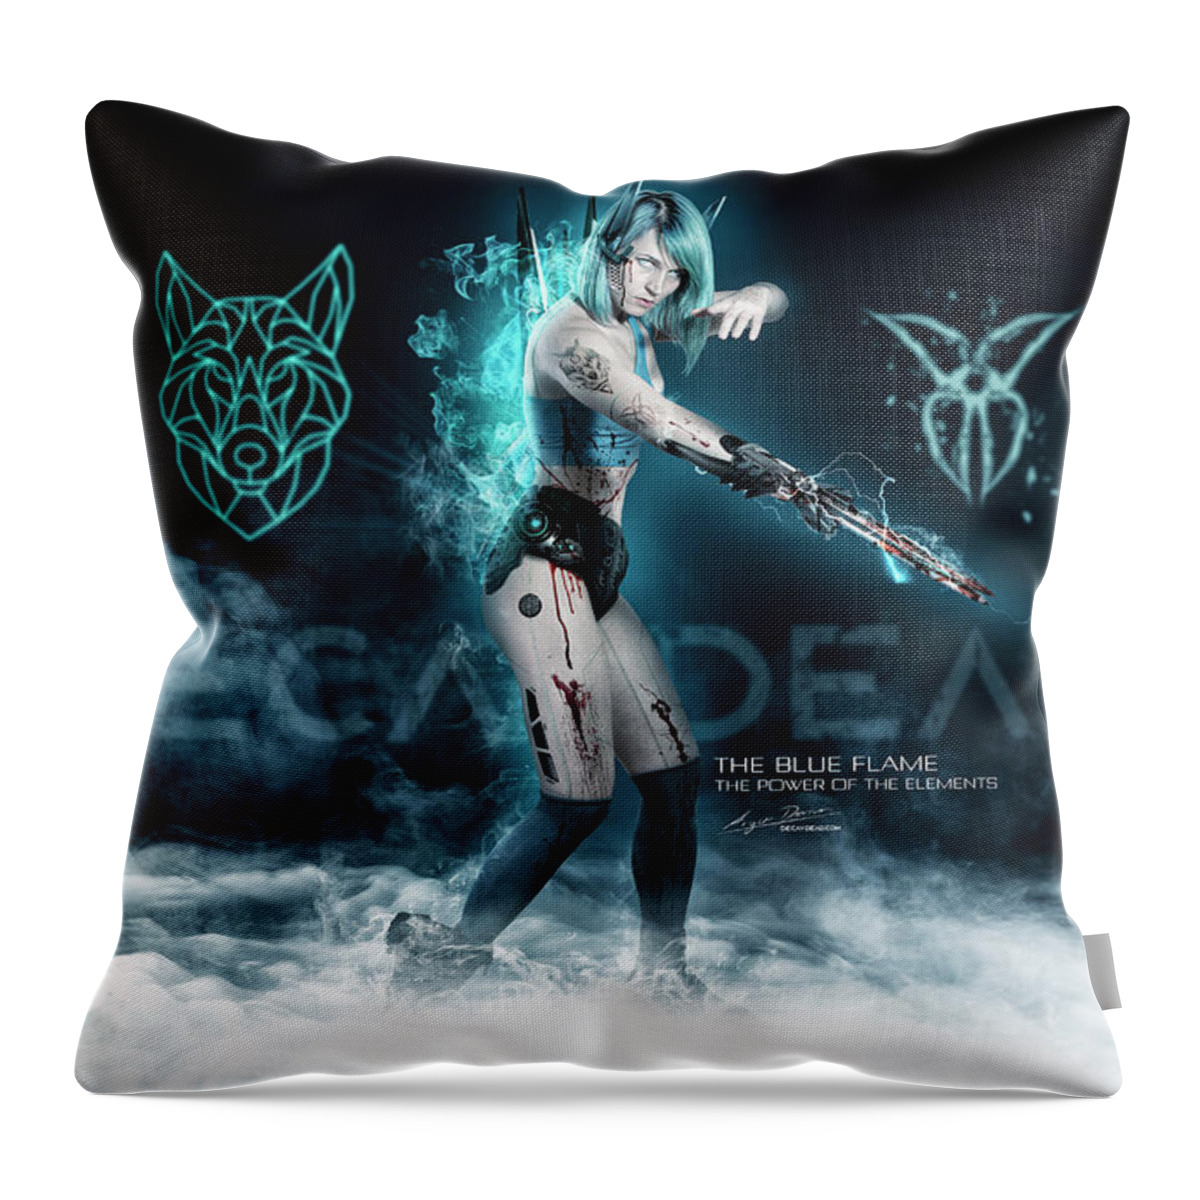 Argus Dorian Throw Pillow featuring the digital art The Blue Flame by Argus Dorian